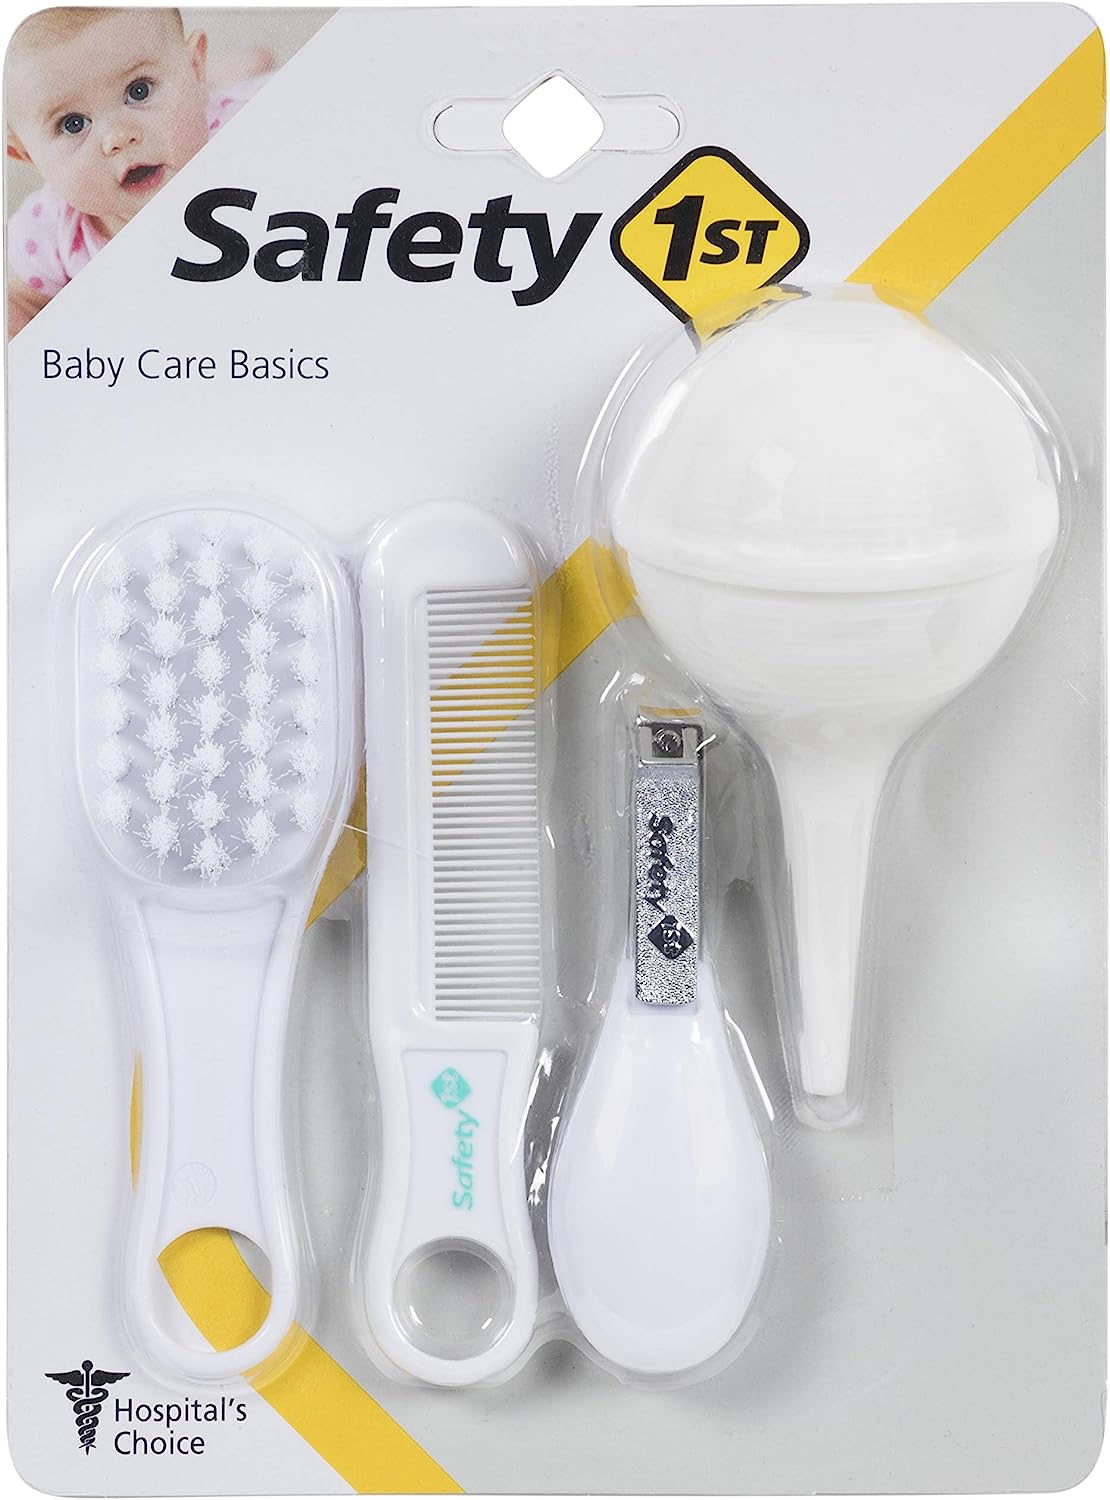 Safety 1st Baby Care Basics KIT: Nail Clippers, Nasal Aspirator, Hair Brush, Hair Comb